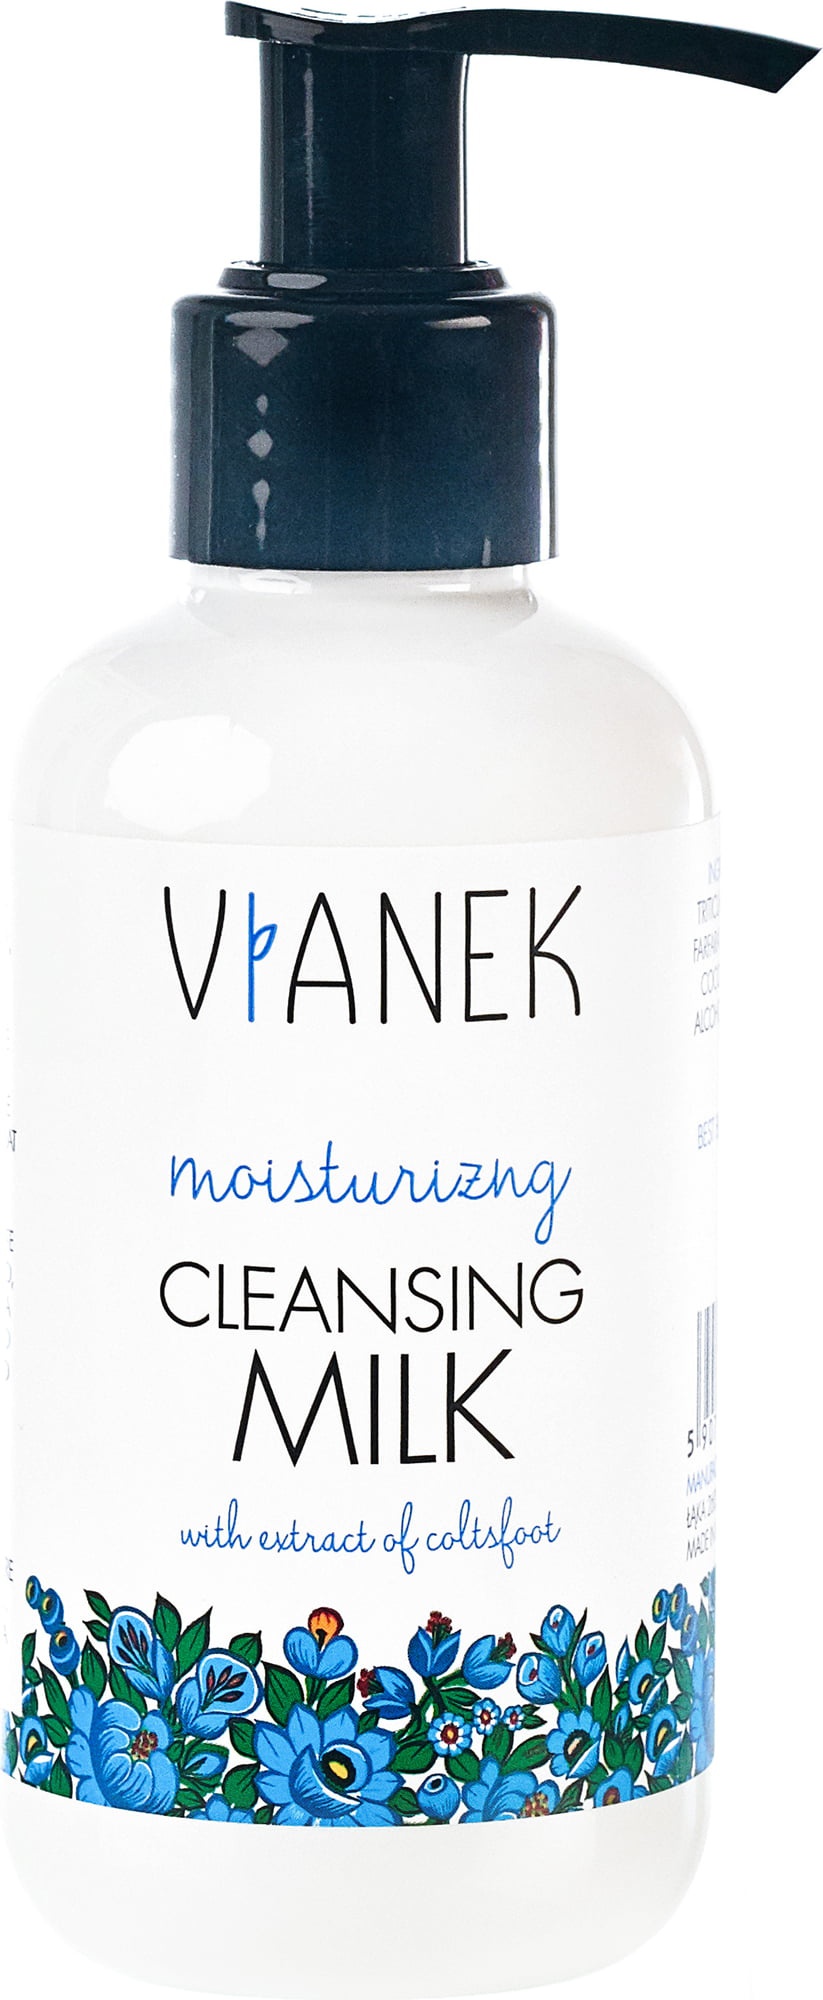 Vianek Moisturizing Cleansing Milk